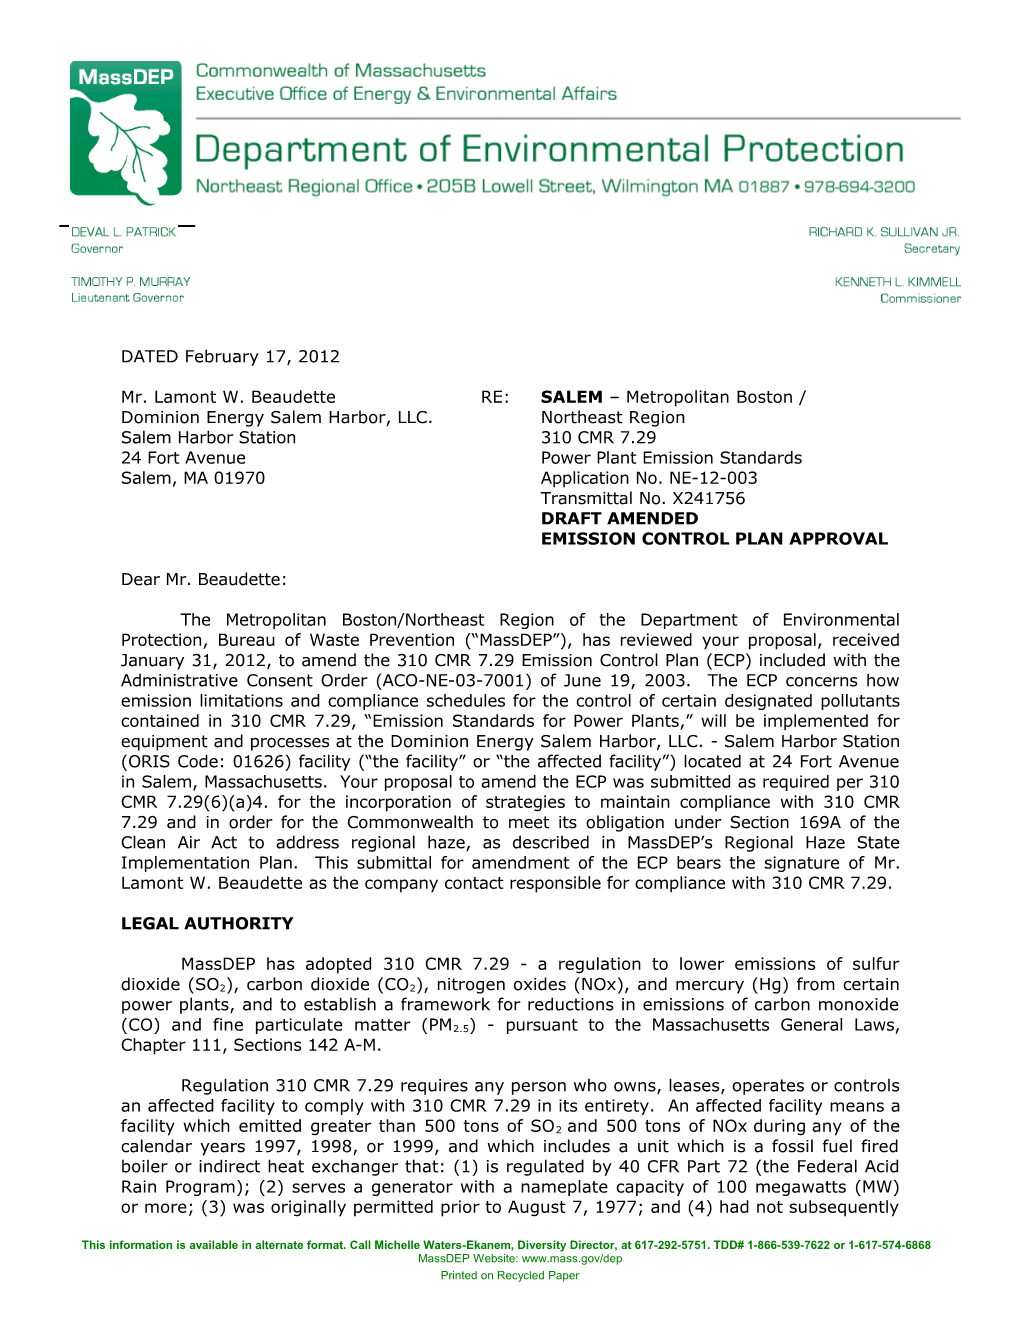 Dominion Energysalemharbor, LLC Salemharbor Station Draft Amended Emission Control Plan Approval